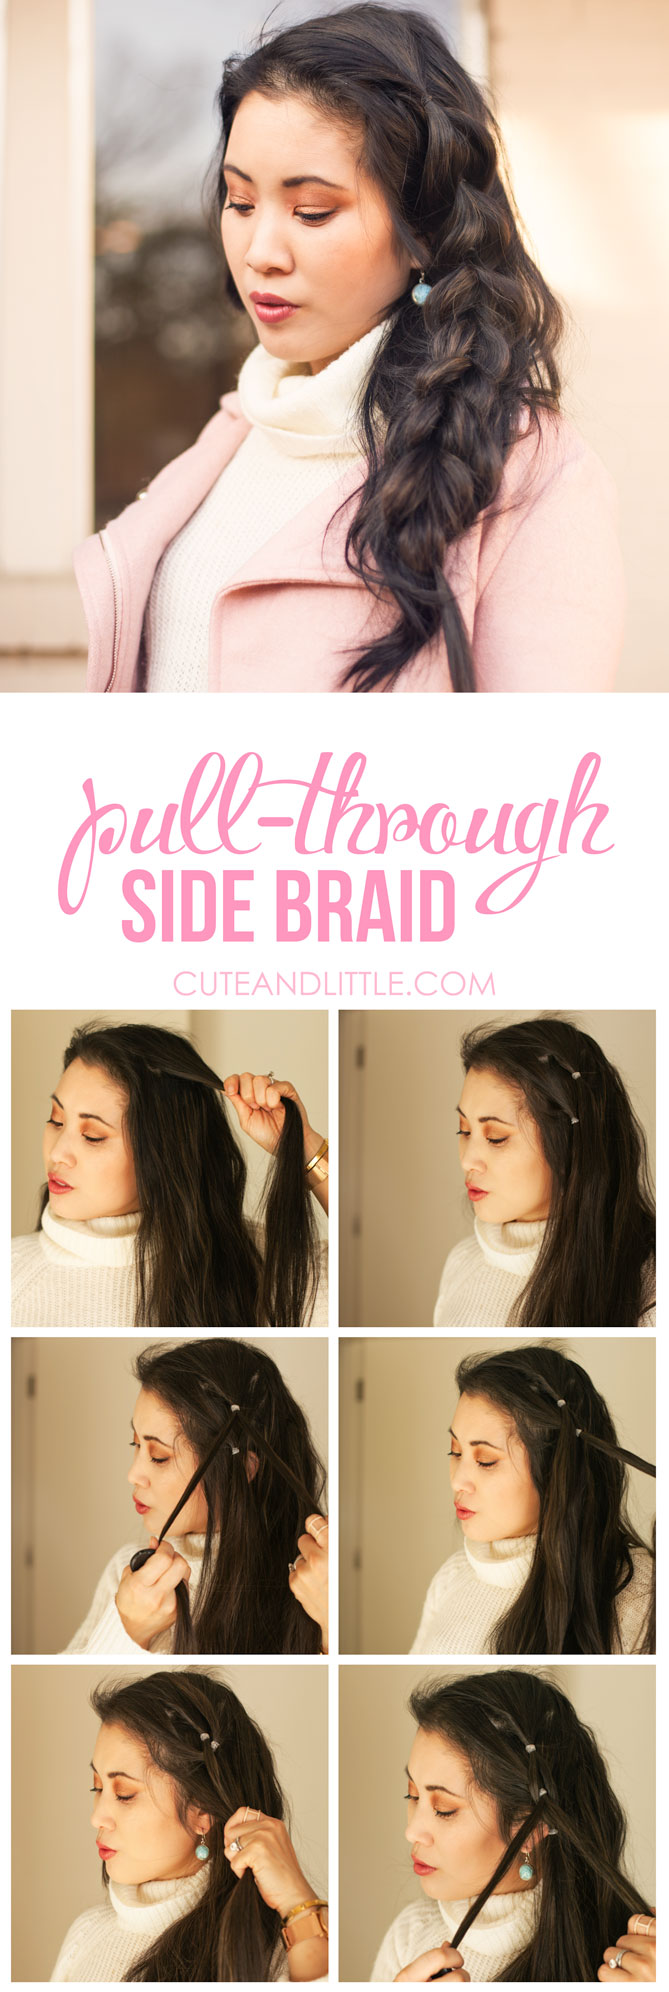 pull-through side braid tutorial #RethinkColour